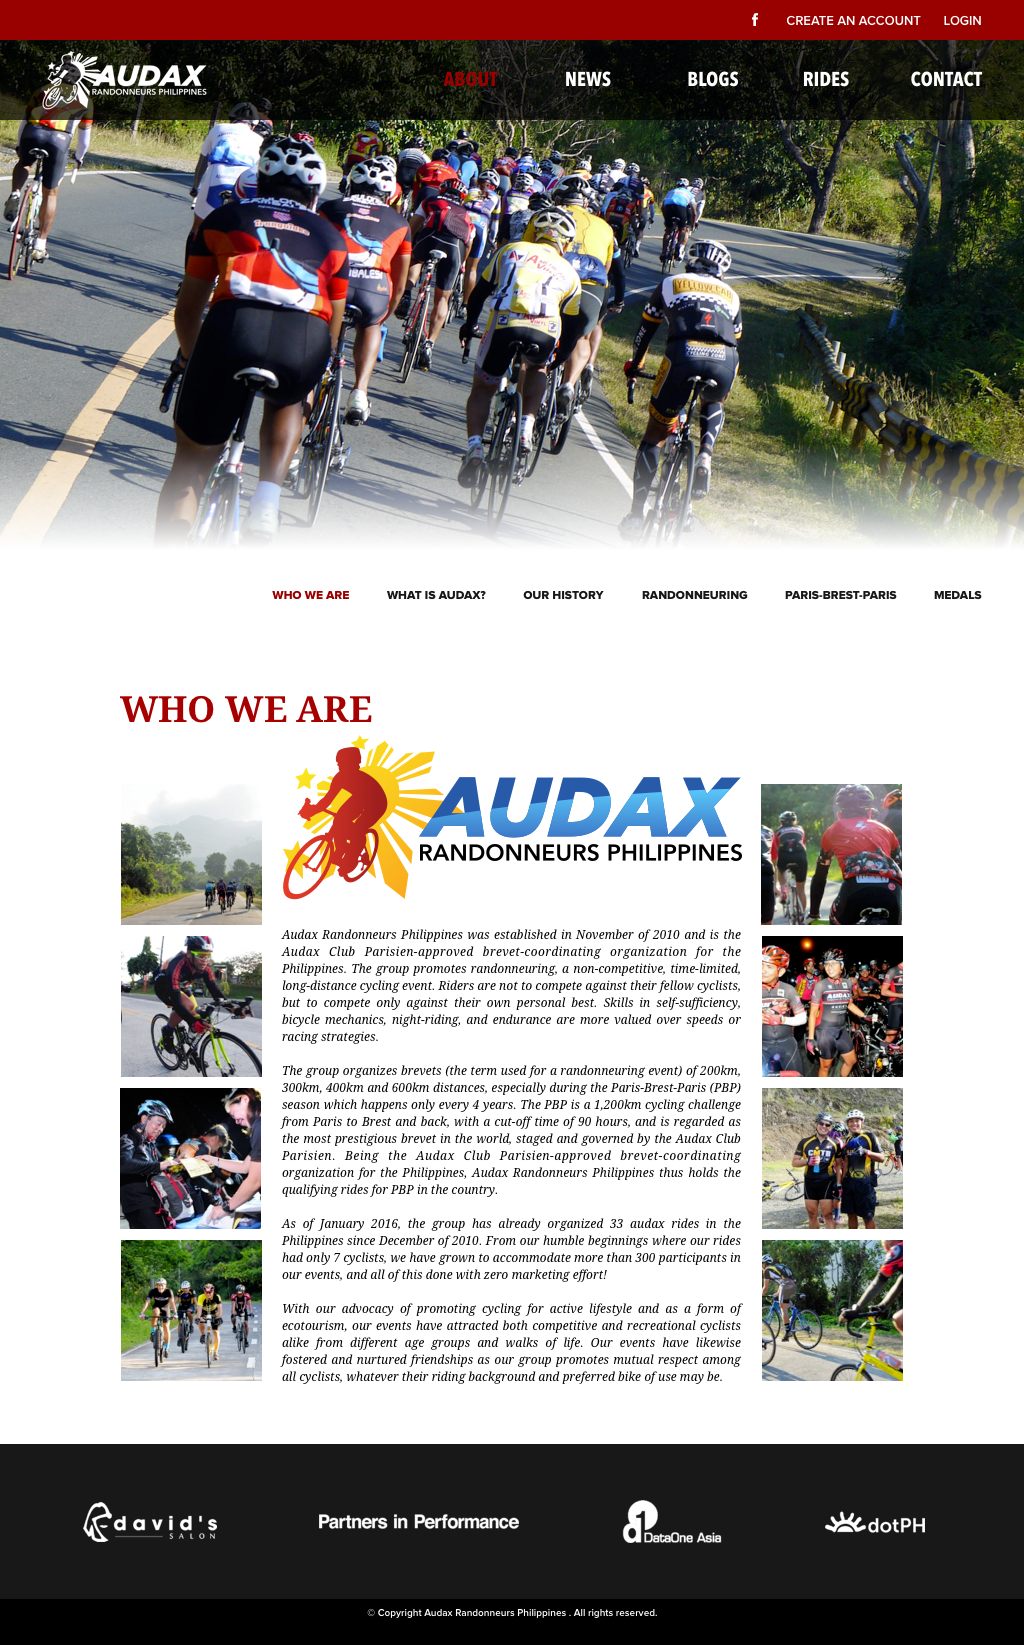 Bike randonneur rides road bike mountain bike Audax philippines